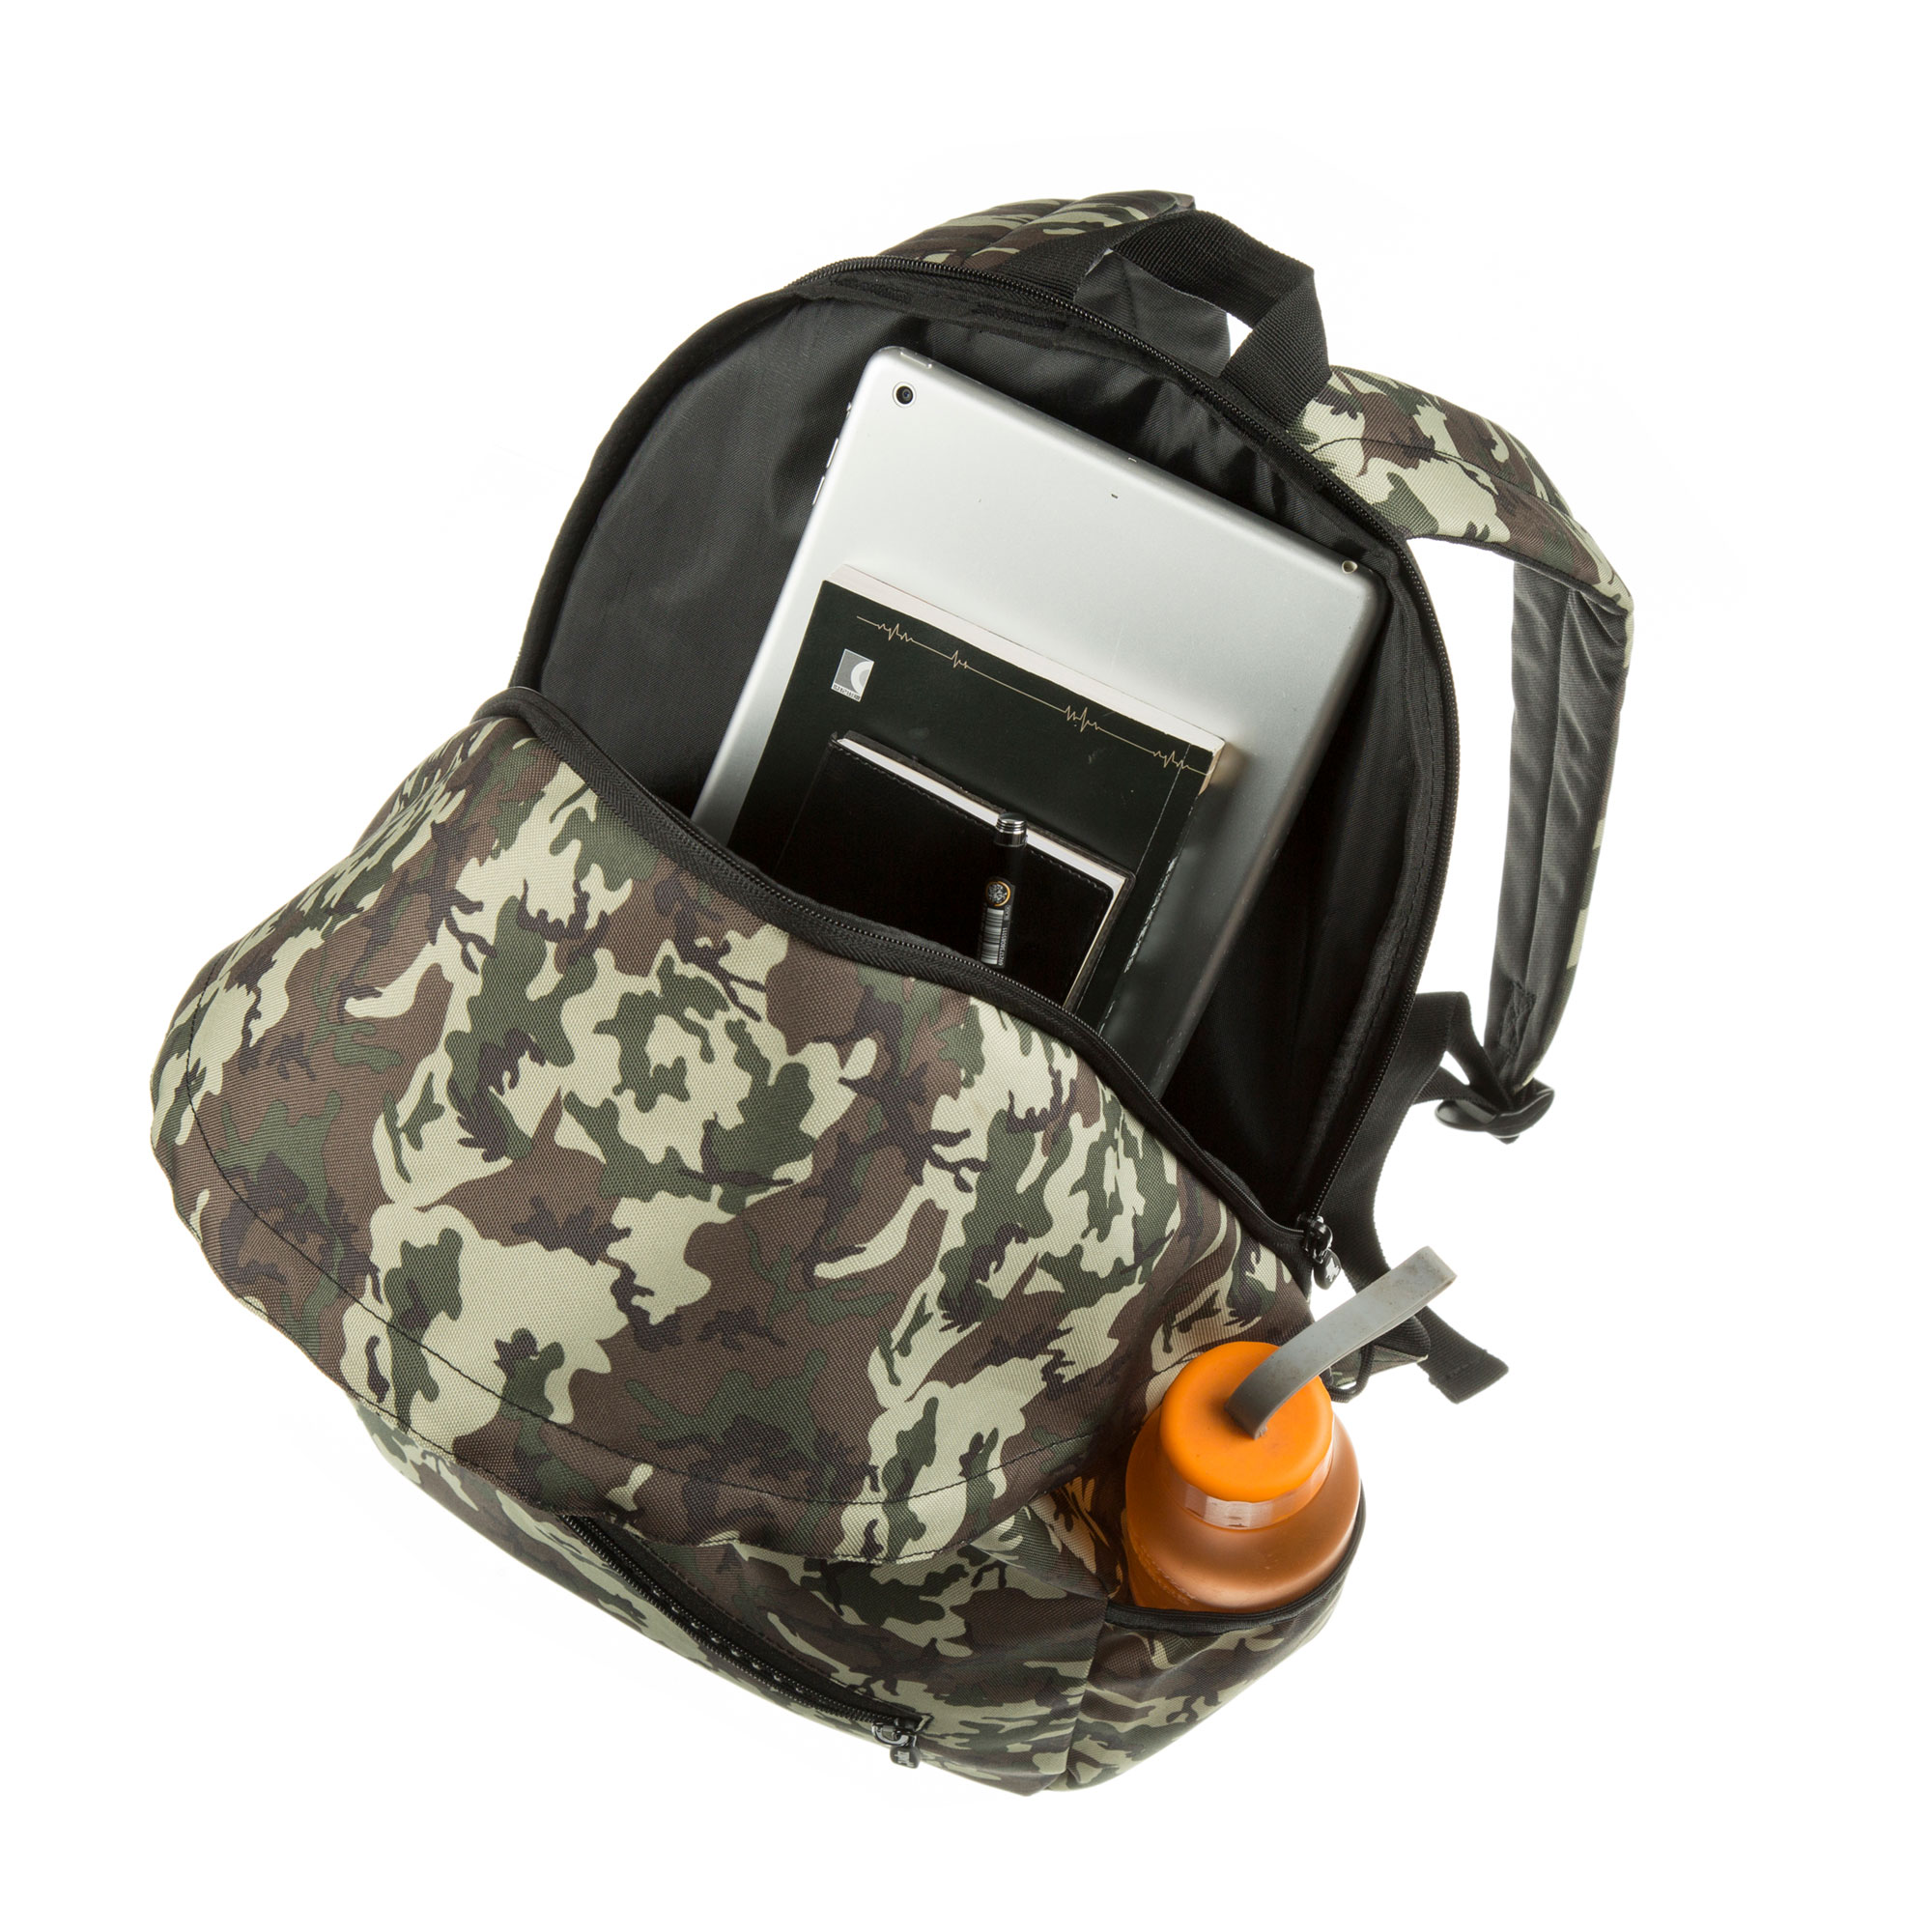 ZIPIT Grillz Backpack for Boys Elementary School & Preschool, Sturdy & Lightweight (Camo Green) - image 3 of 10